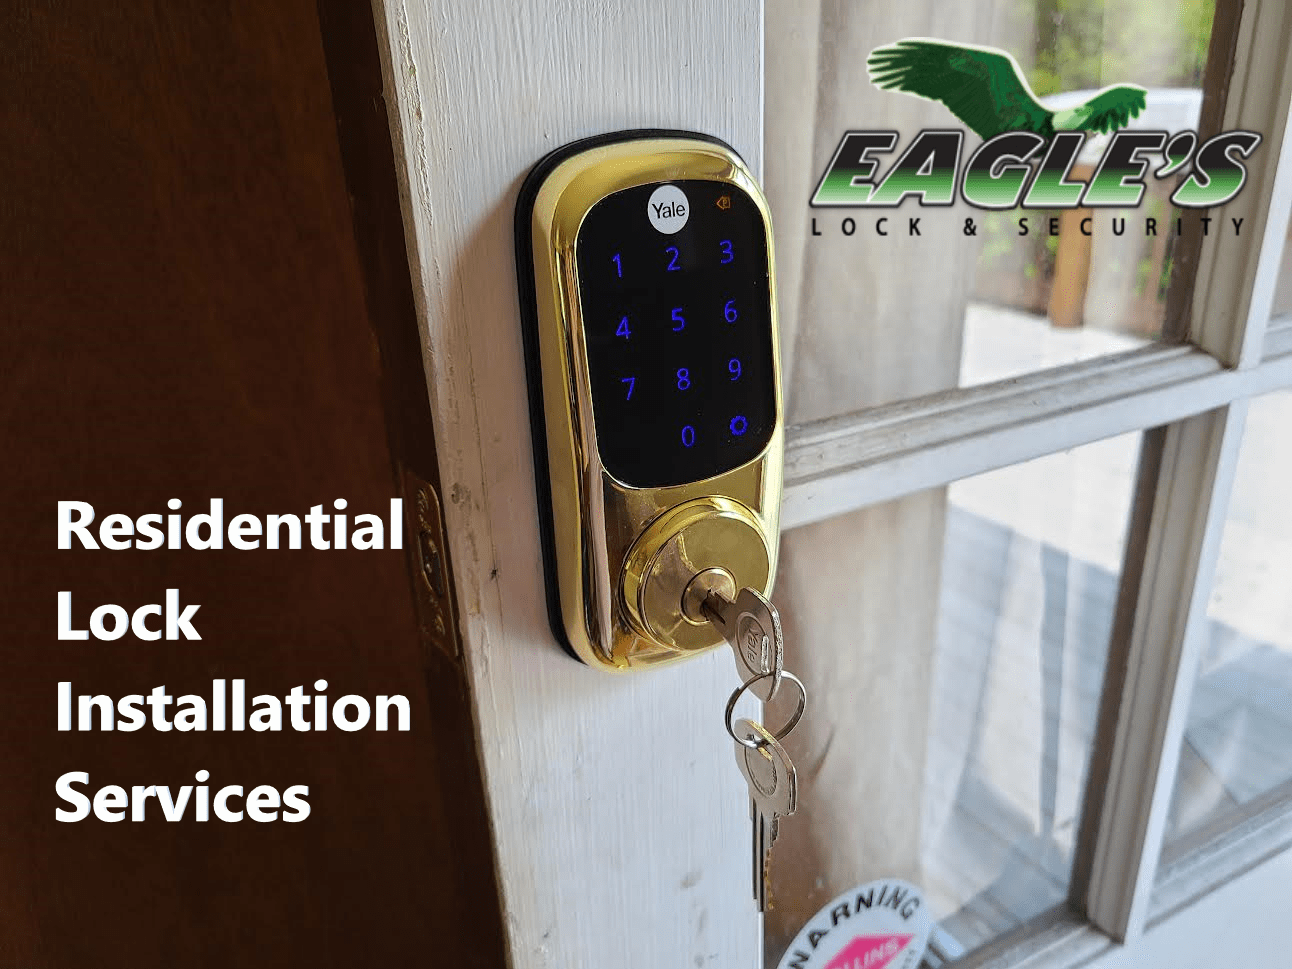 Residential Lock Installation Services - Eagle's Locksmith Cincinnati